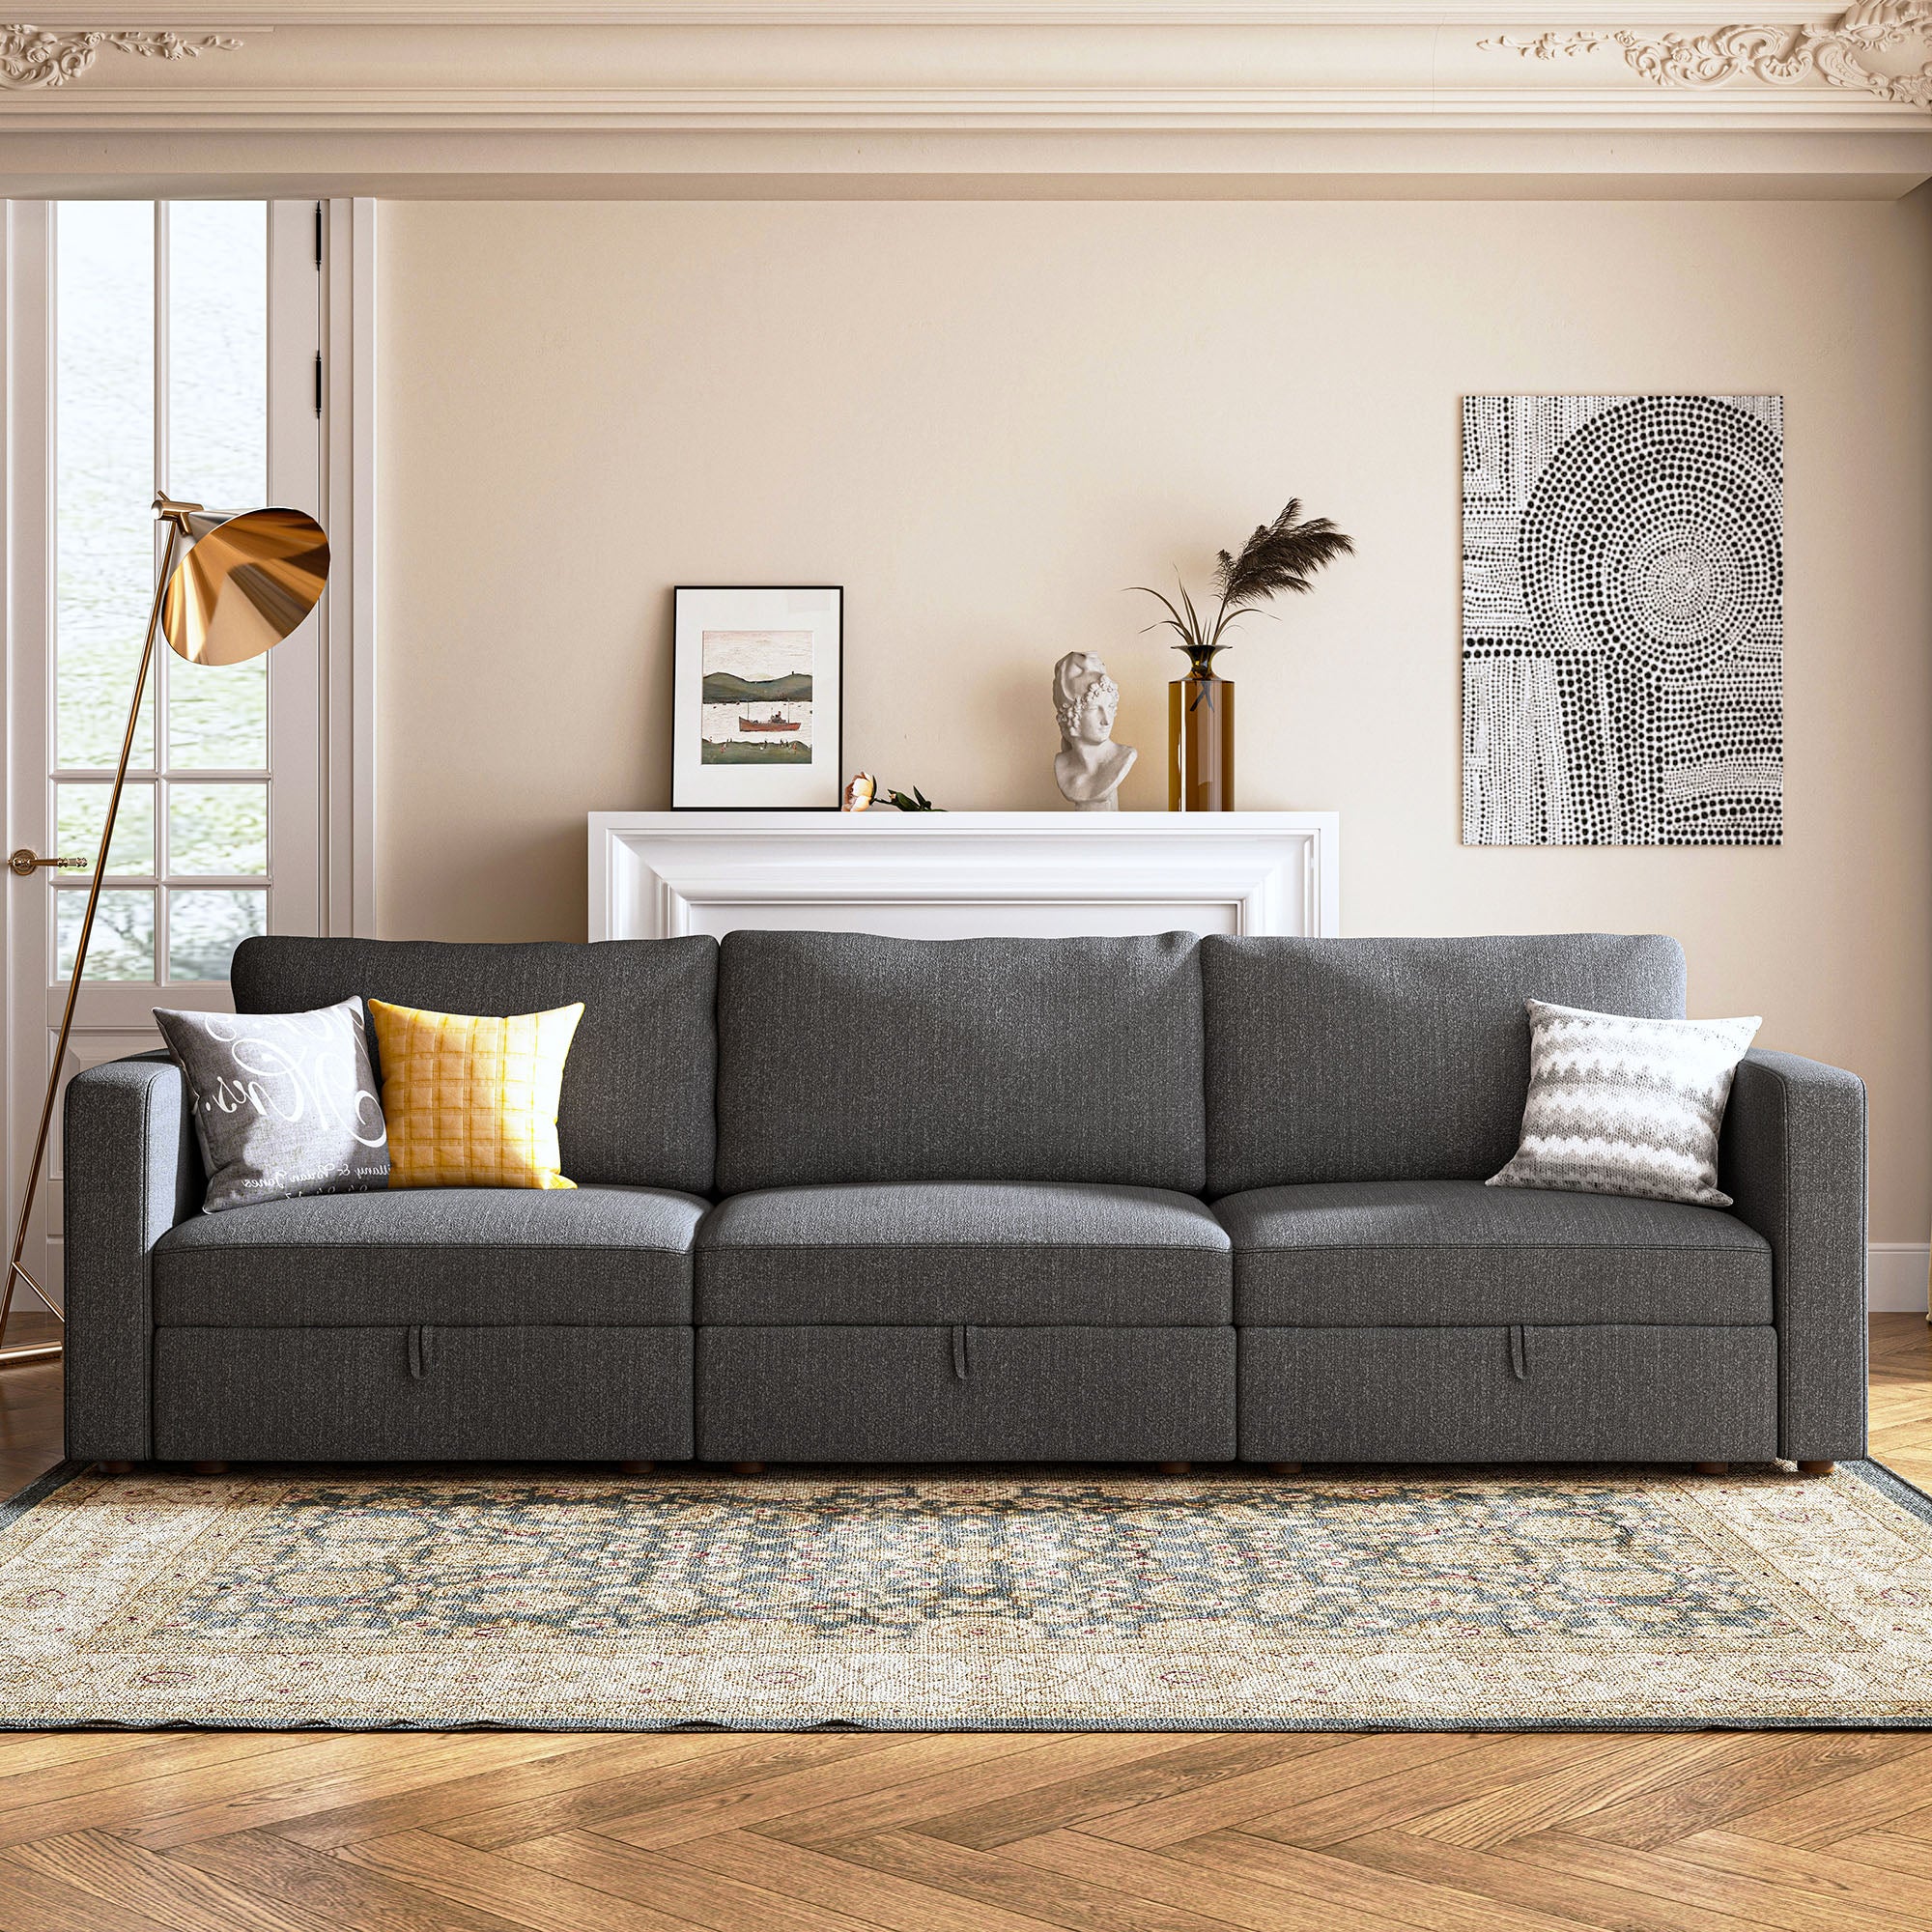 HONBAY Fabric Luxurious 3 Seates Storage Modular Sofa for Living Room